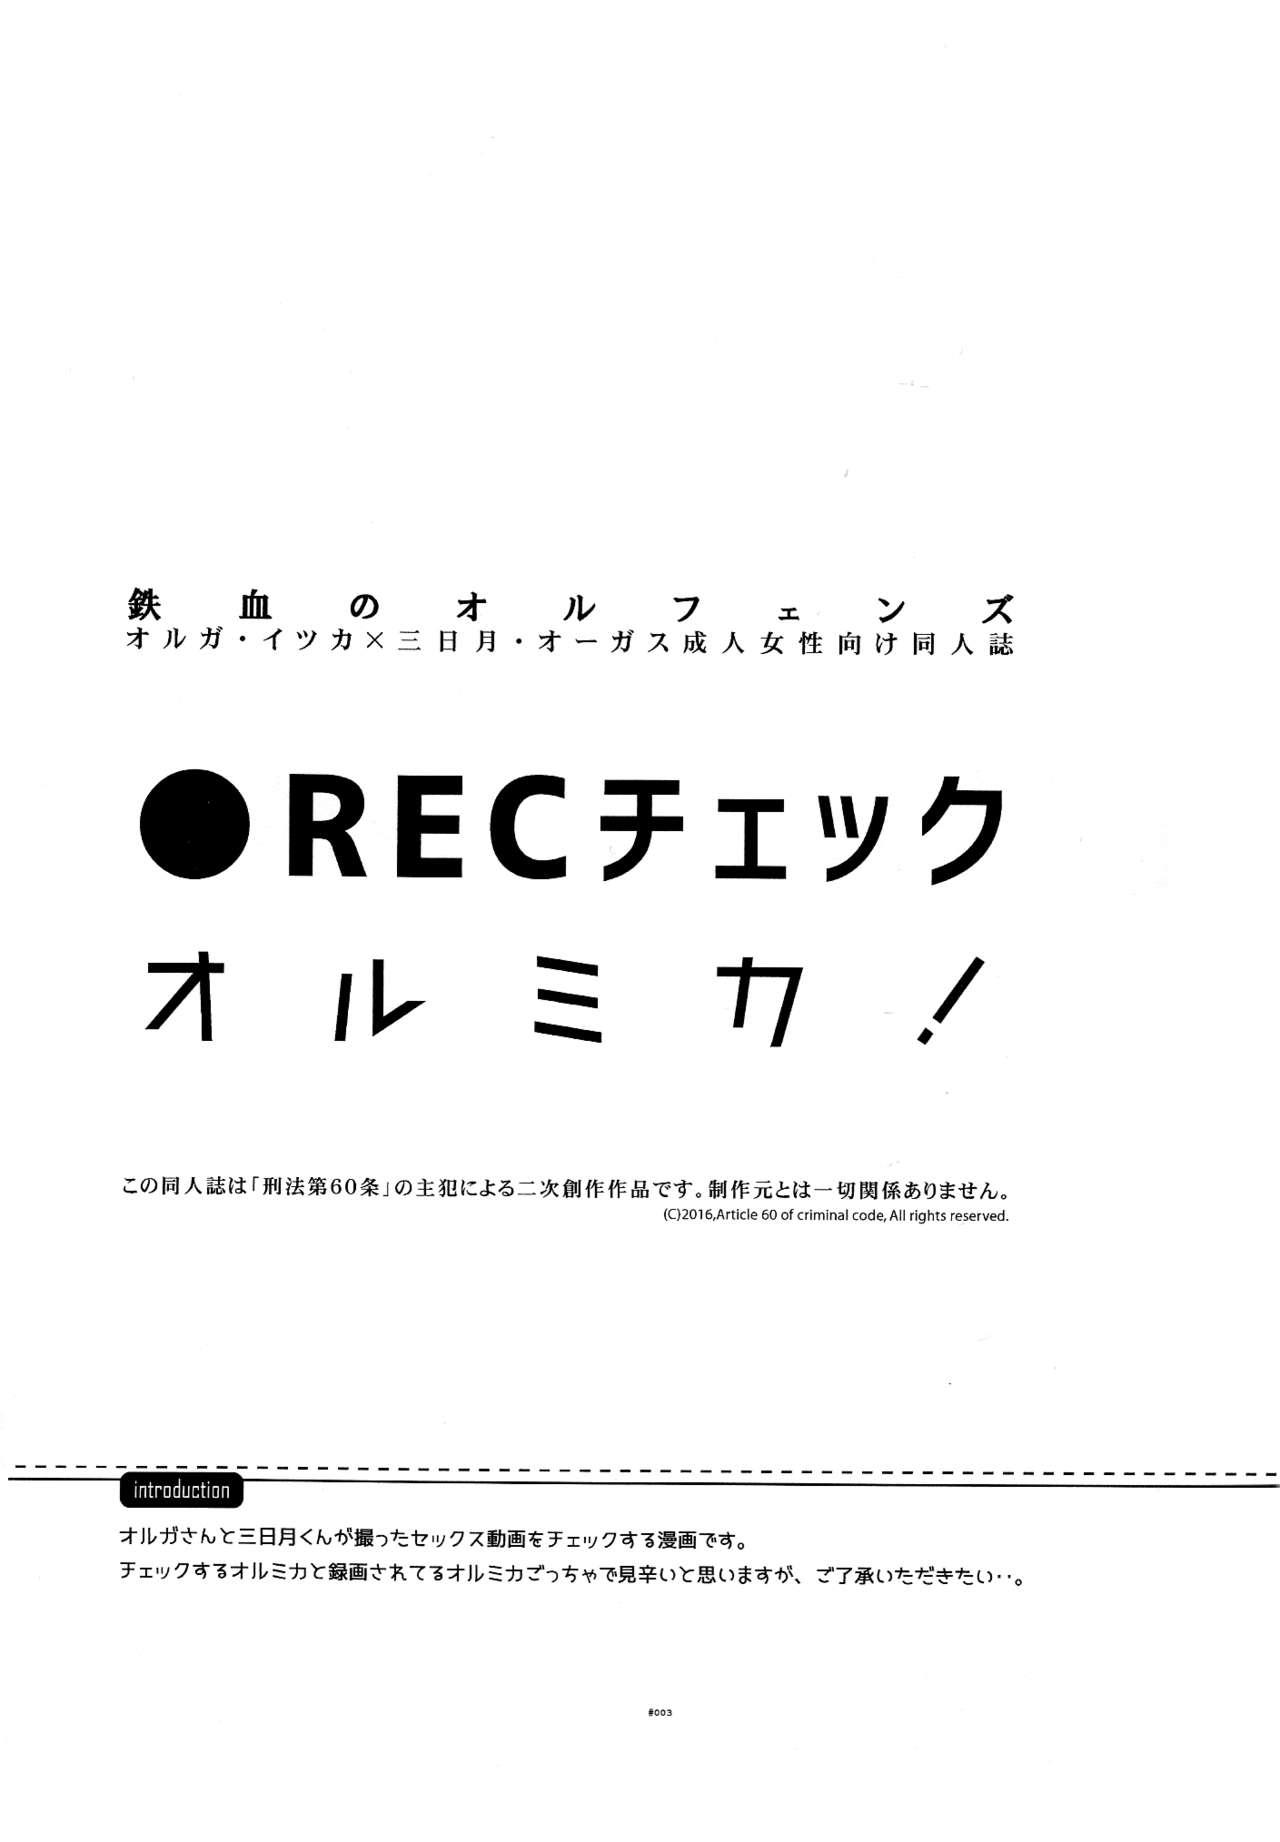 Casting REC Check OrMika! - Mobile suit gundam tekketsu no orphans Cock - Picture 3